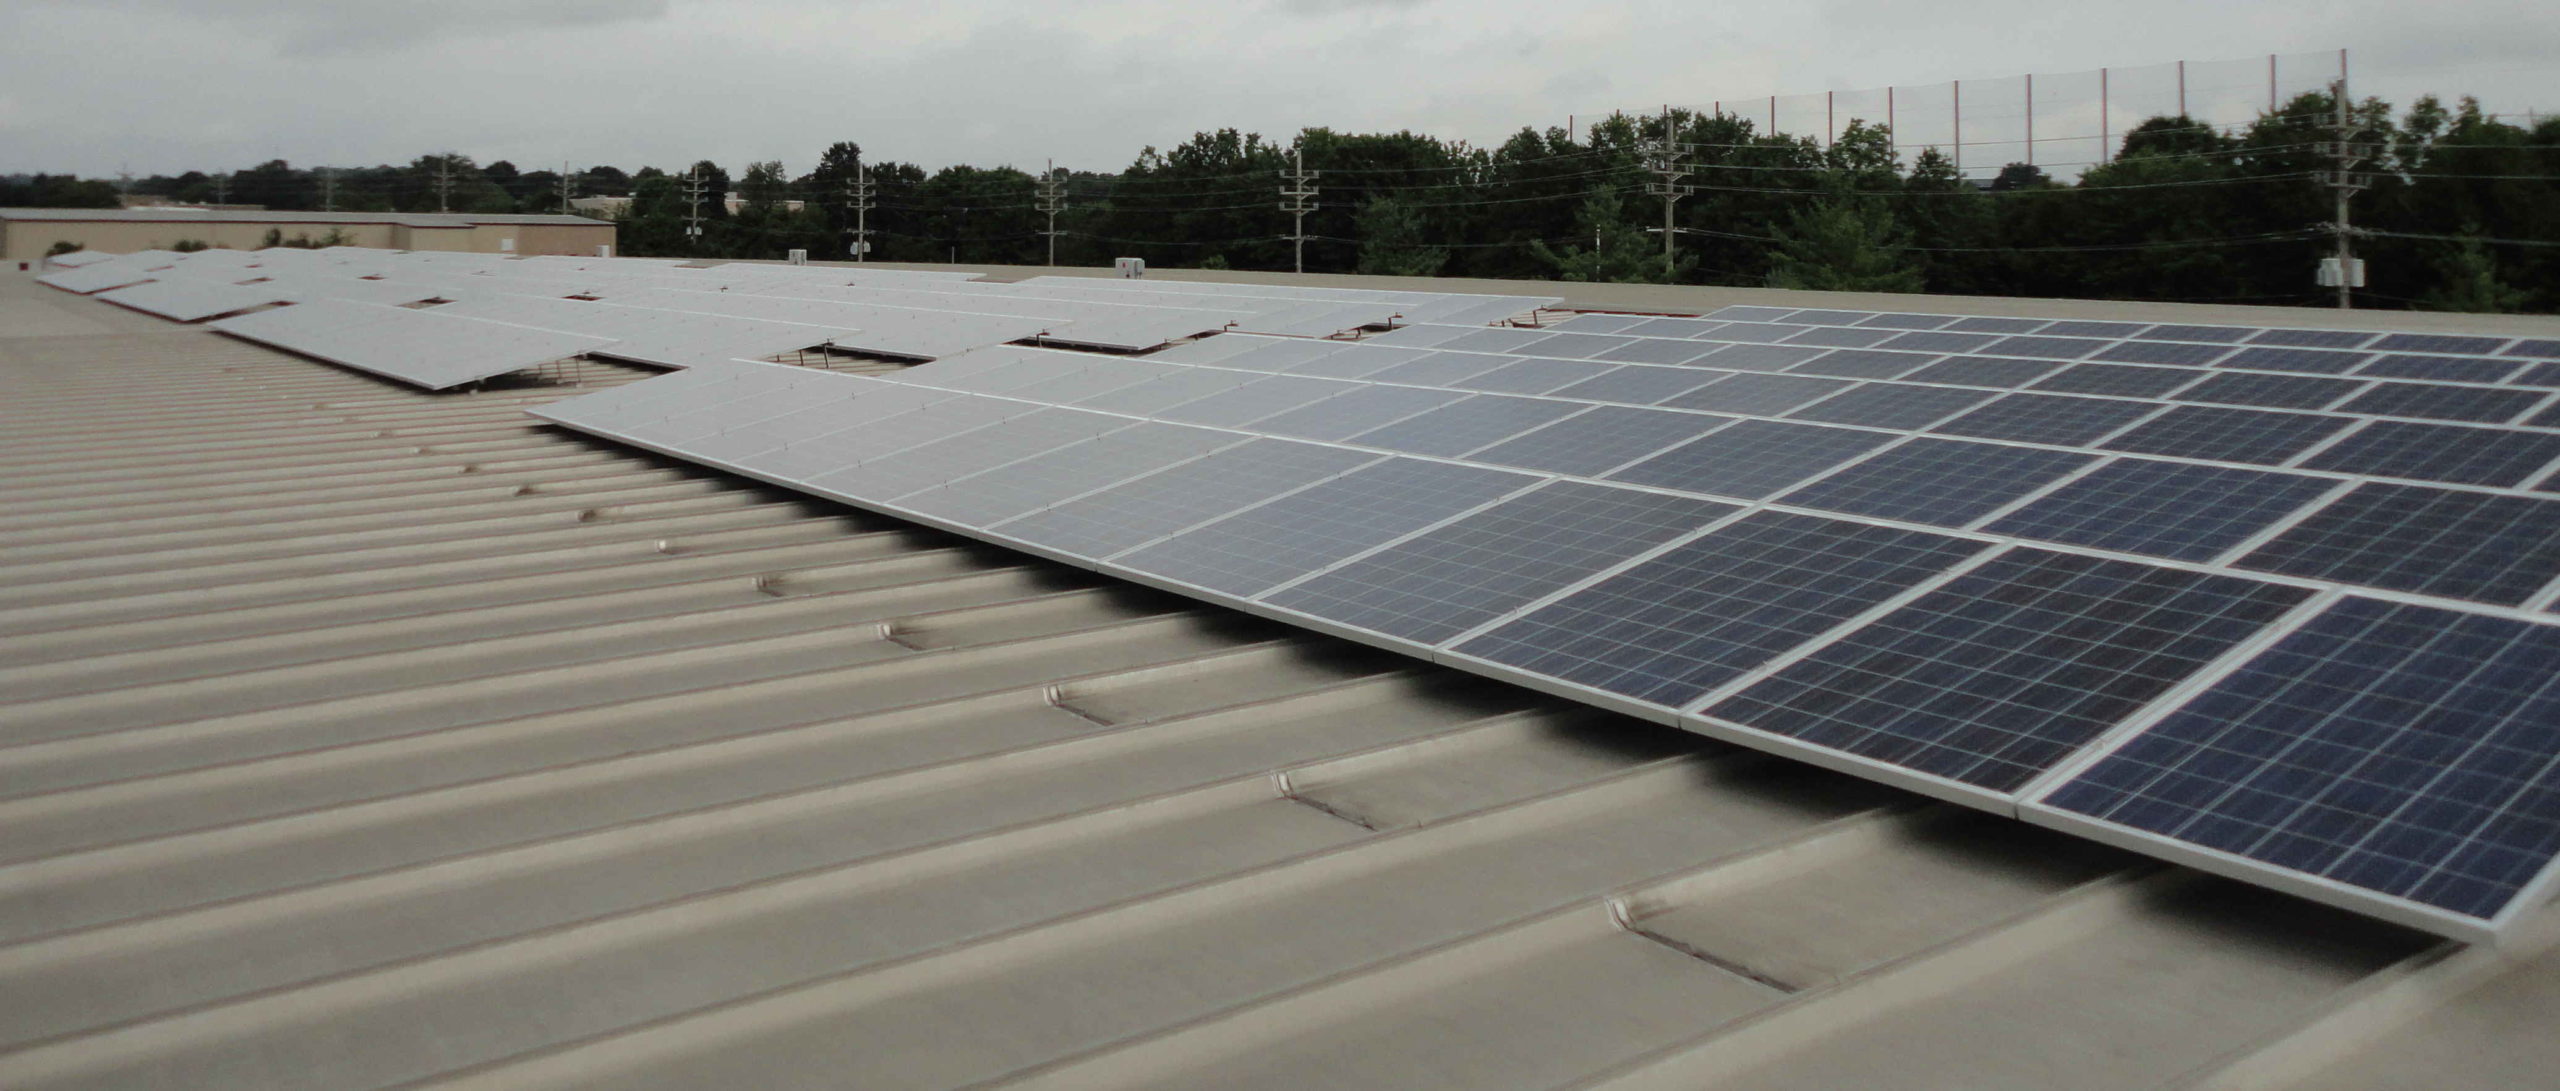 solar panels from NJ2